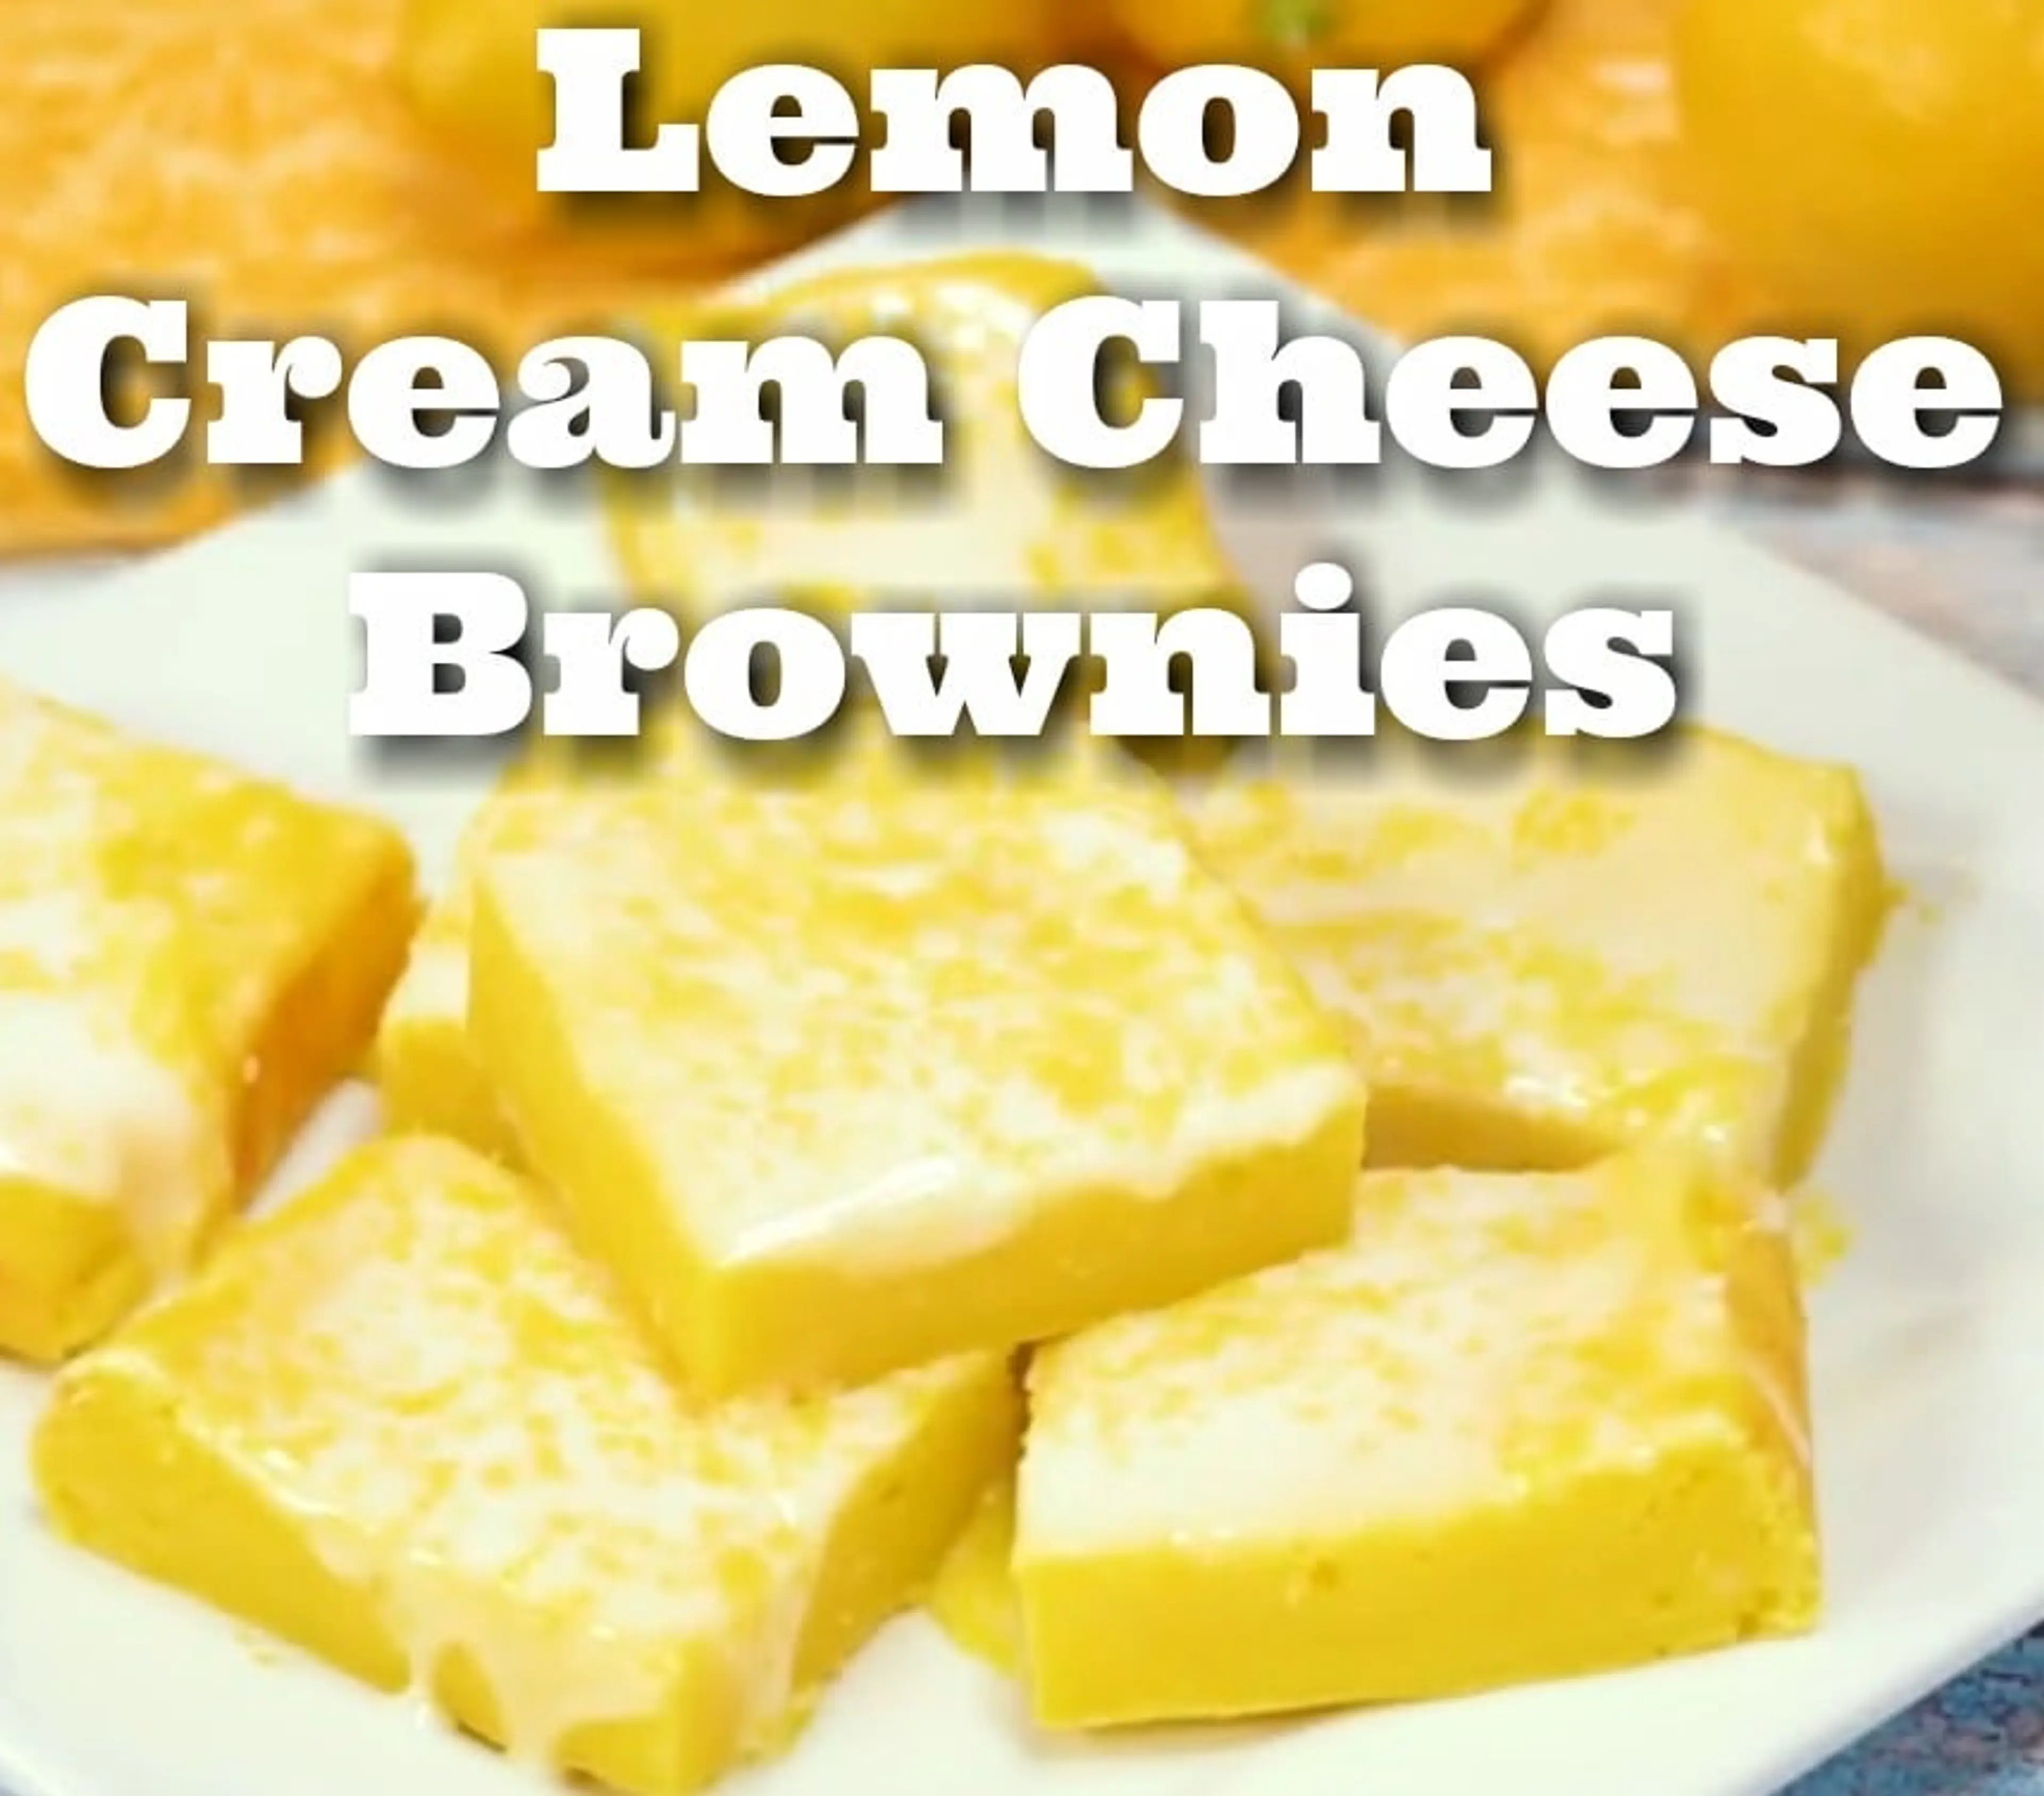 Lemon Cream Cheese Brownies!